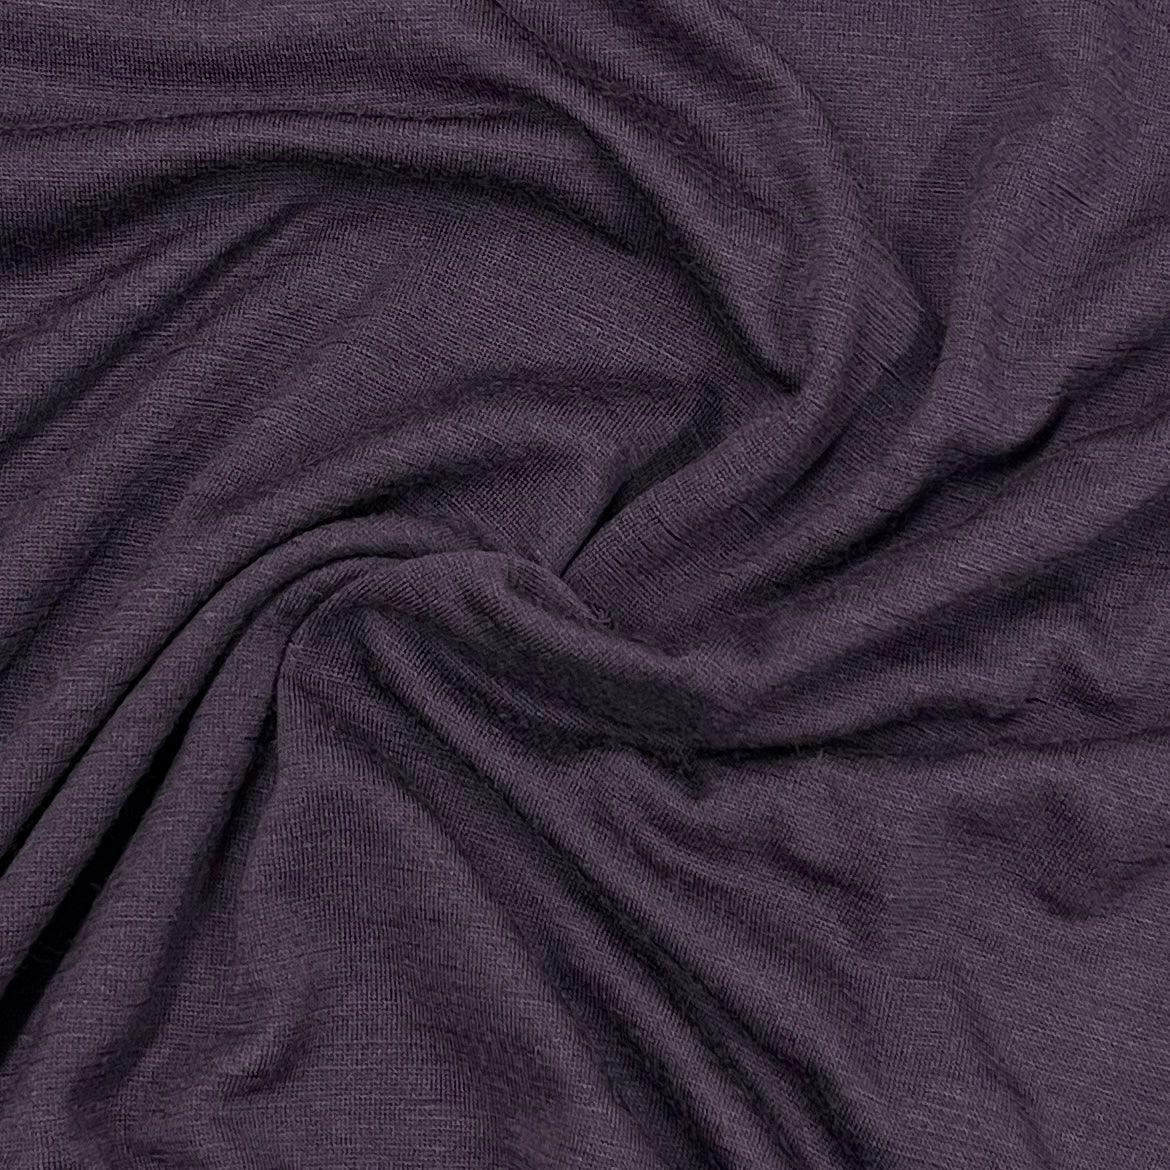 Tencel Modal Stretch Jersey, Teal/moroccan, Purple/plum, 1 Yard, 